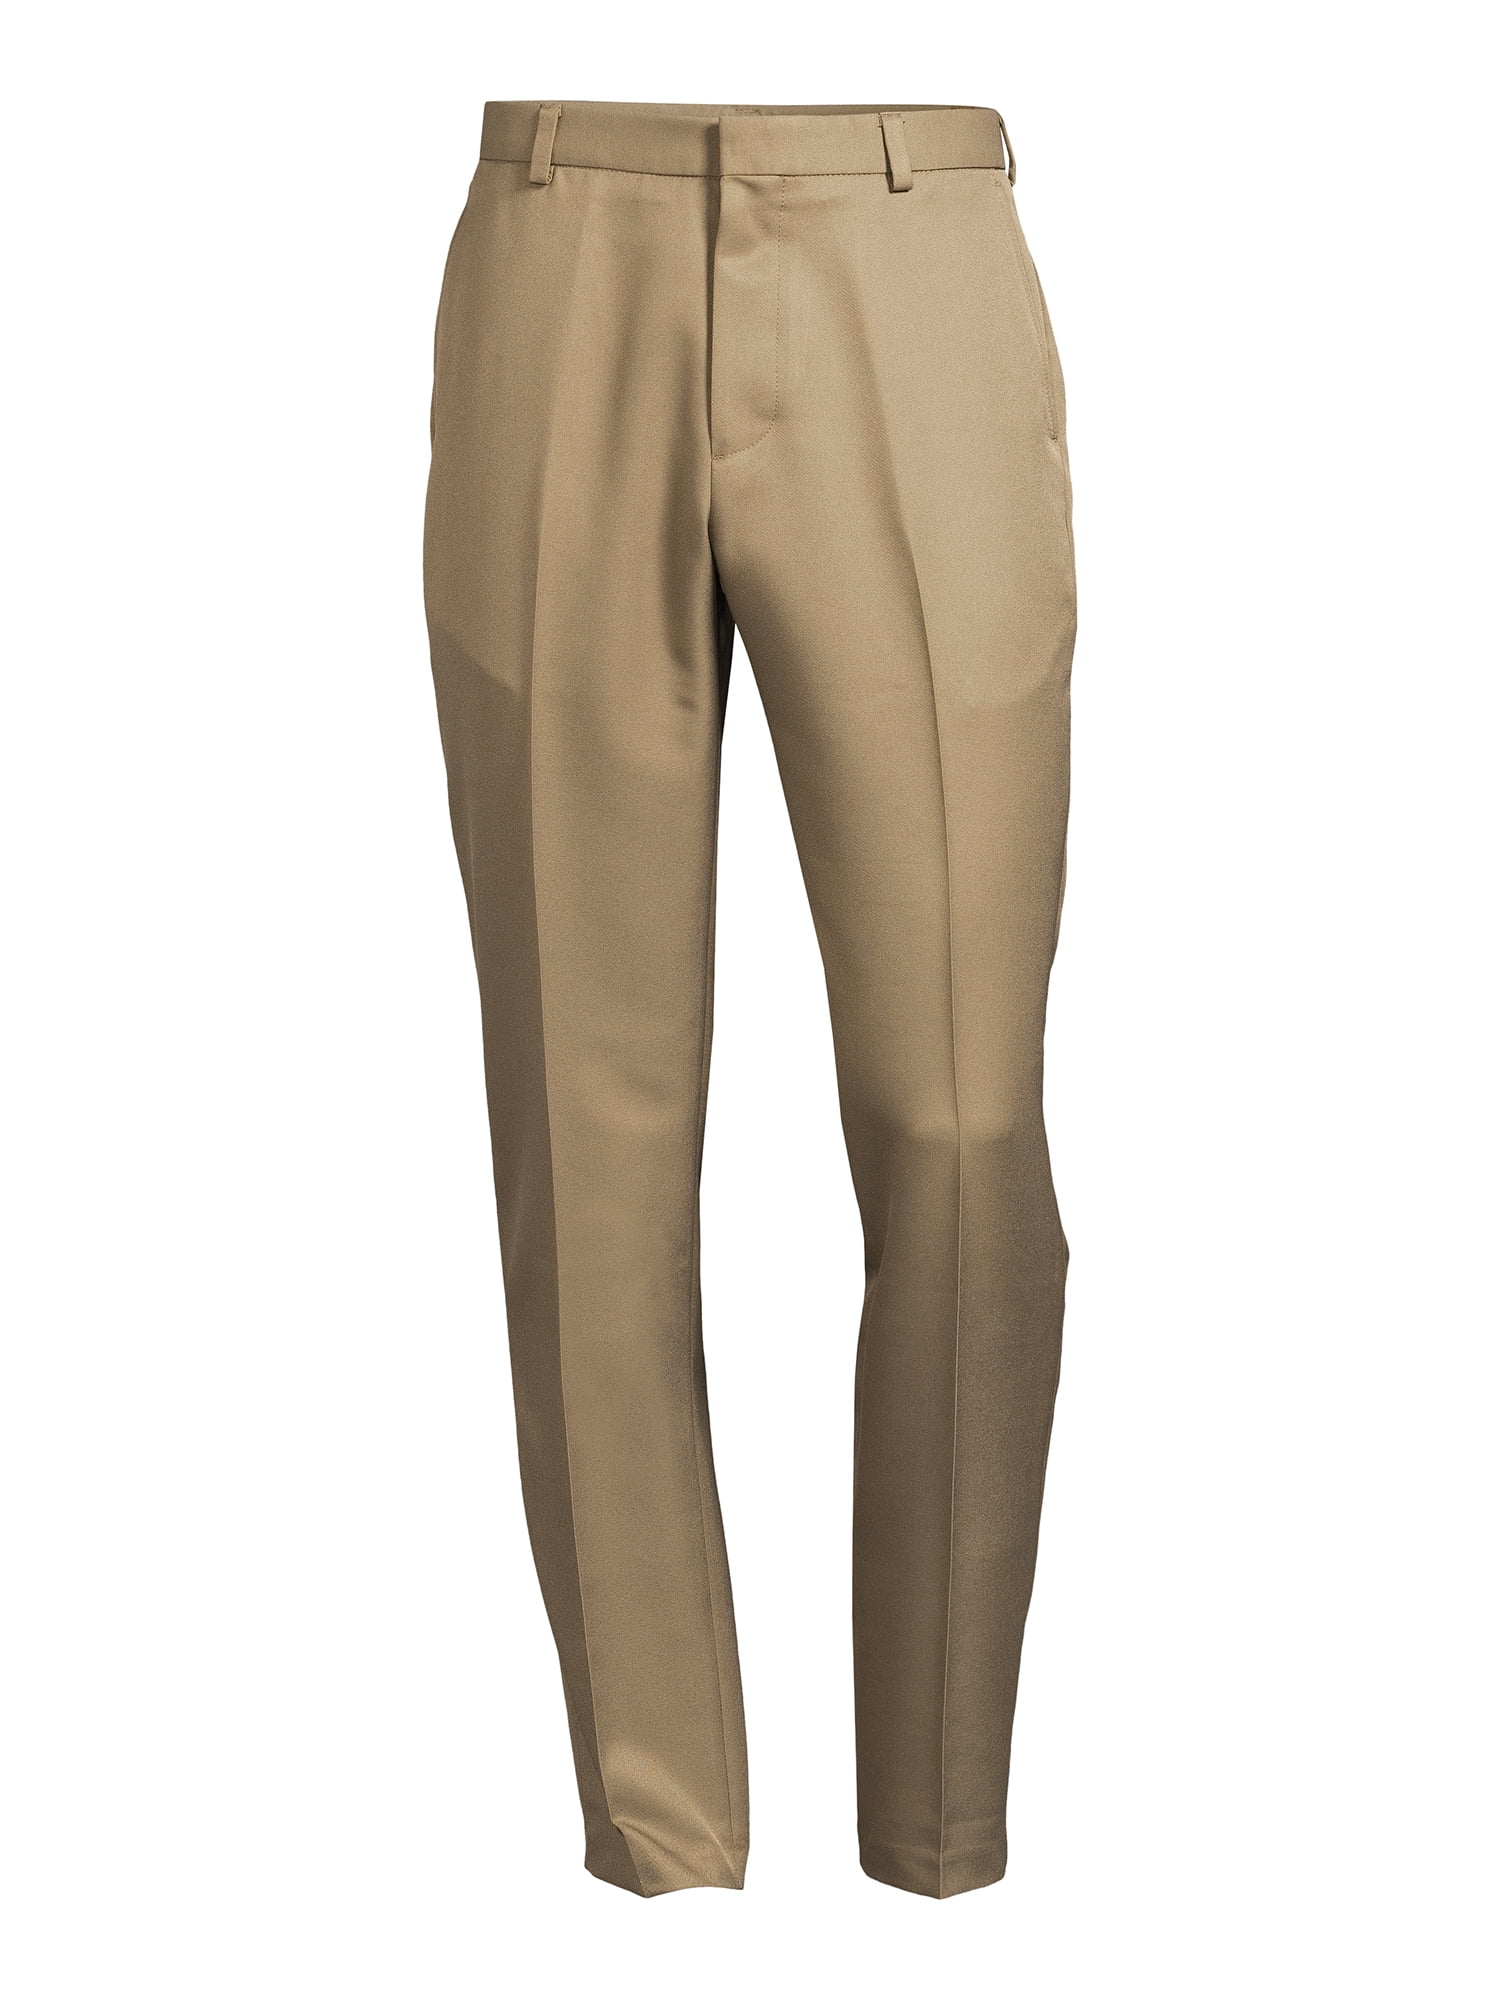 George Men's Slim Fit Flat Front Sorbtek Microfiber Dress Pants 